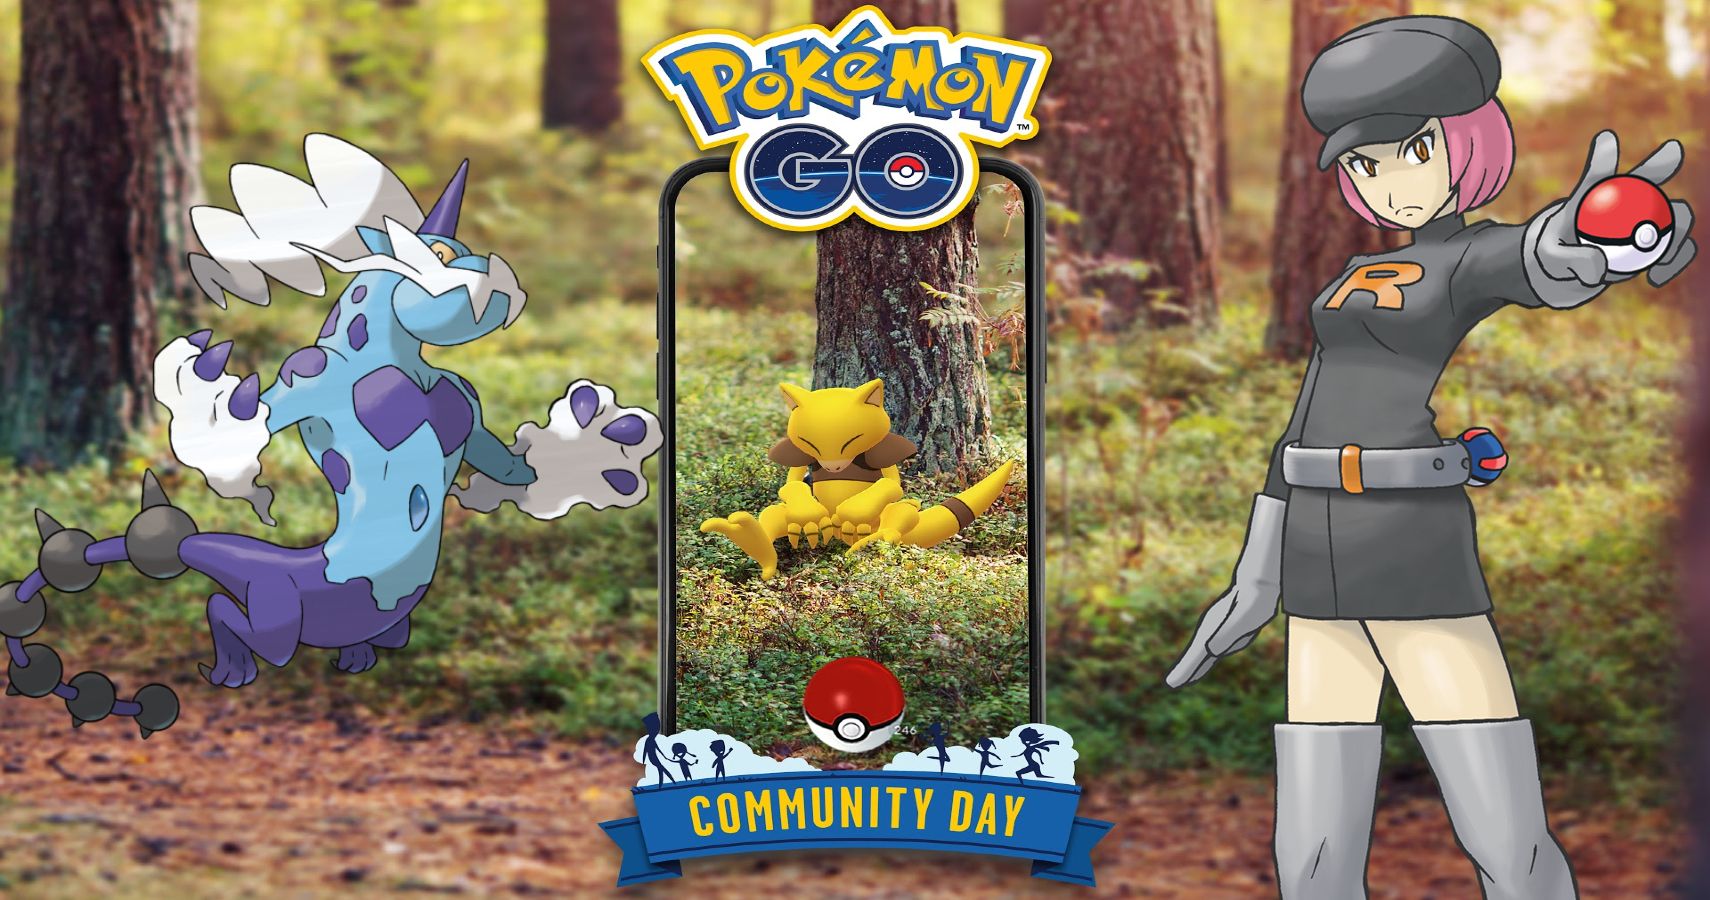 Pokémon GO March Community Day Field Research Rewards, Legendary